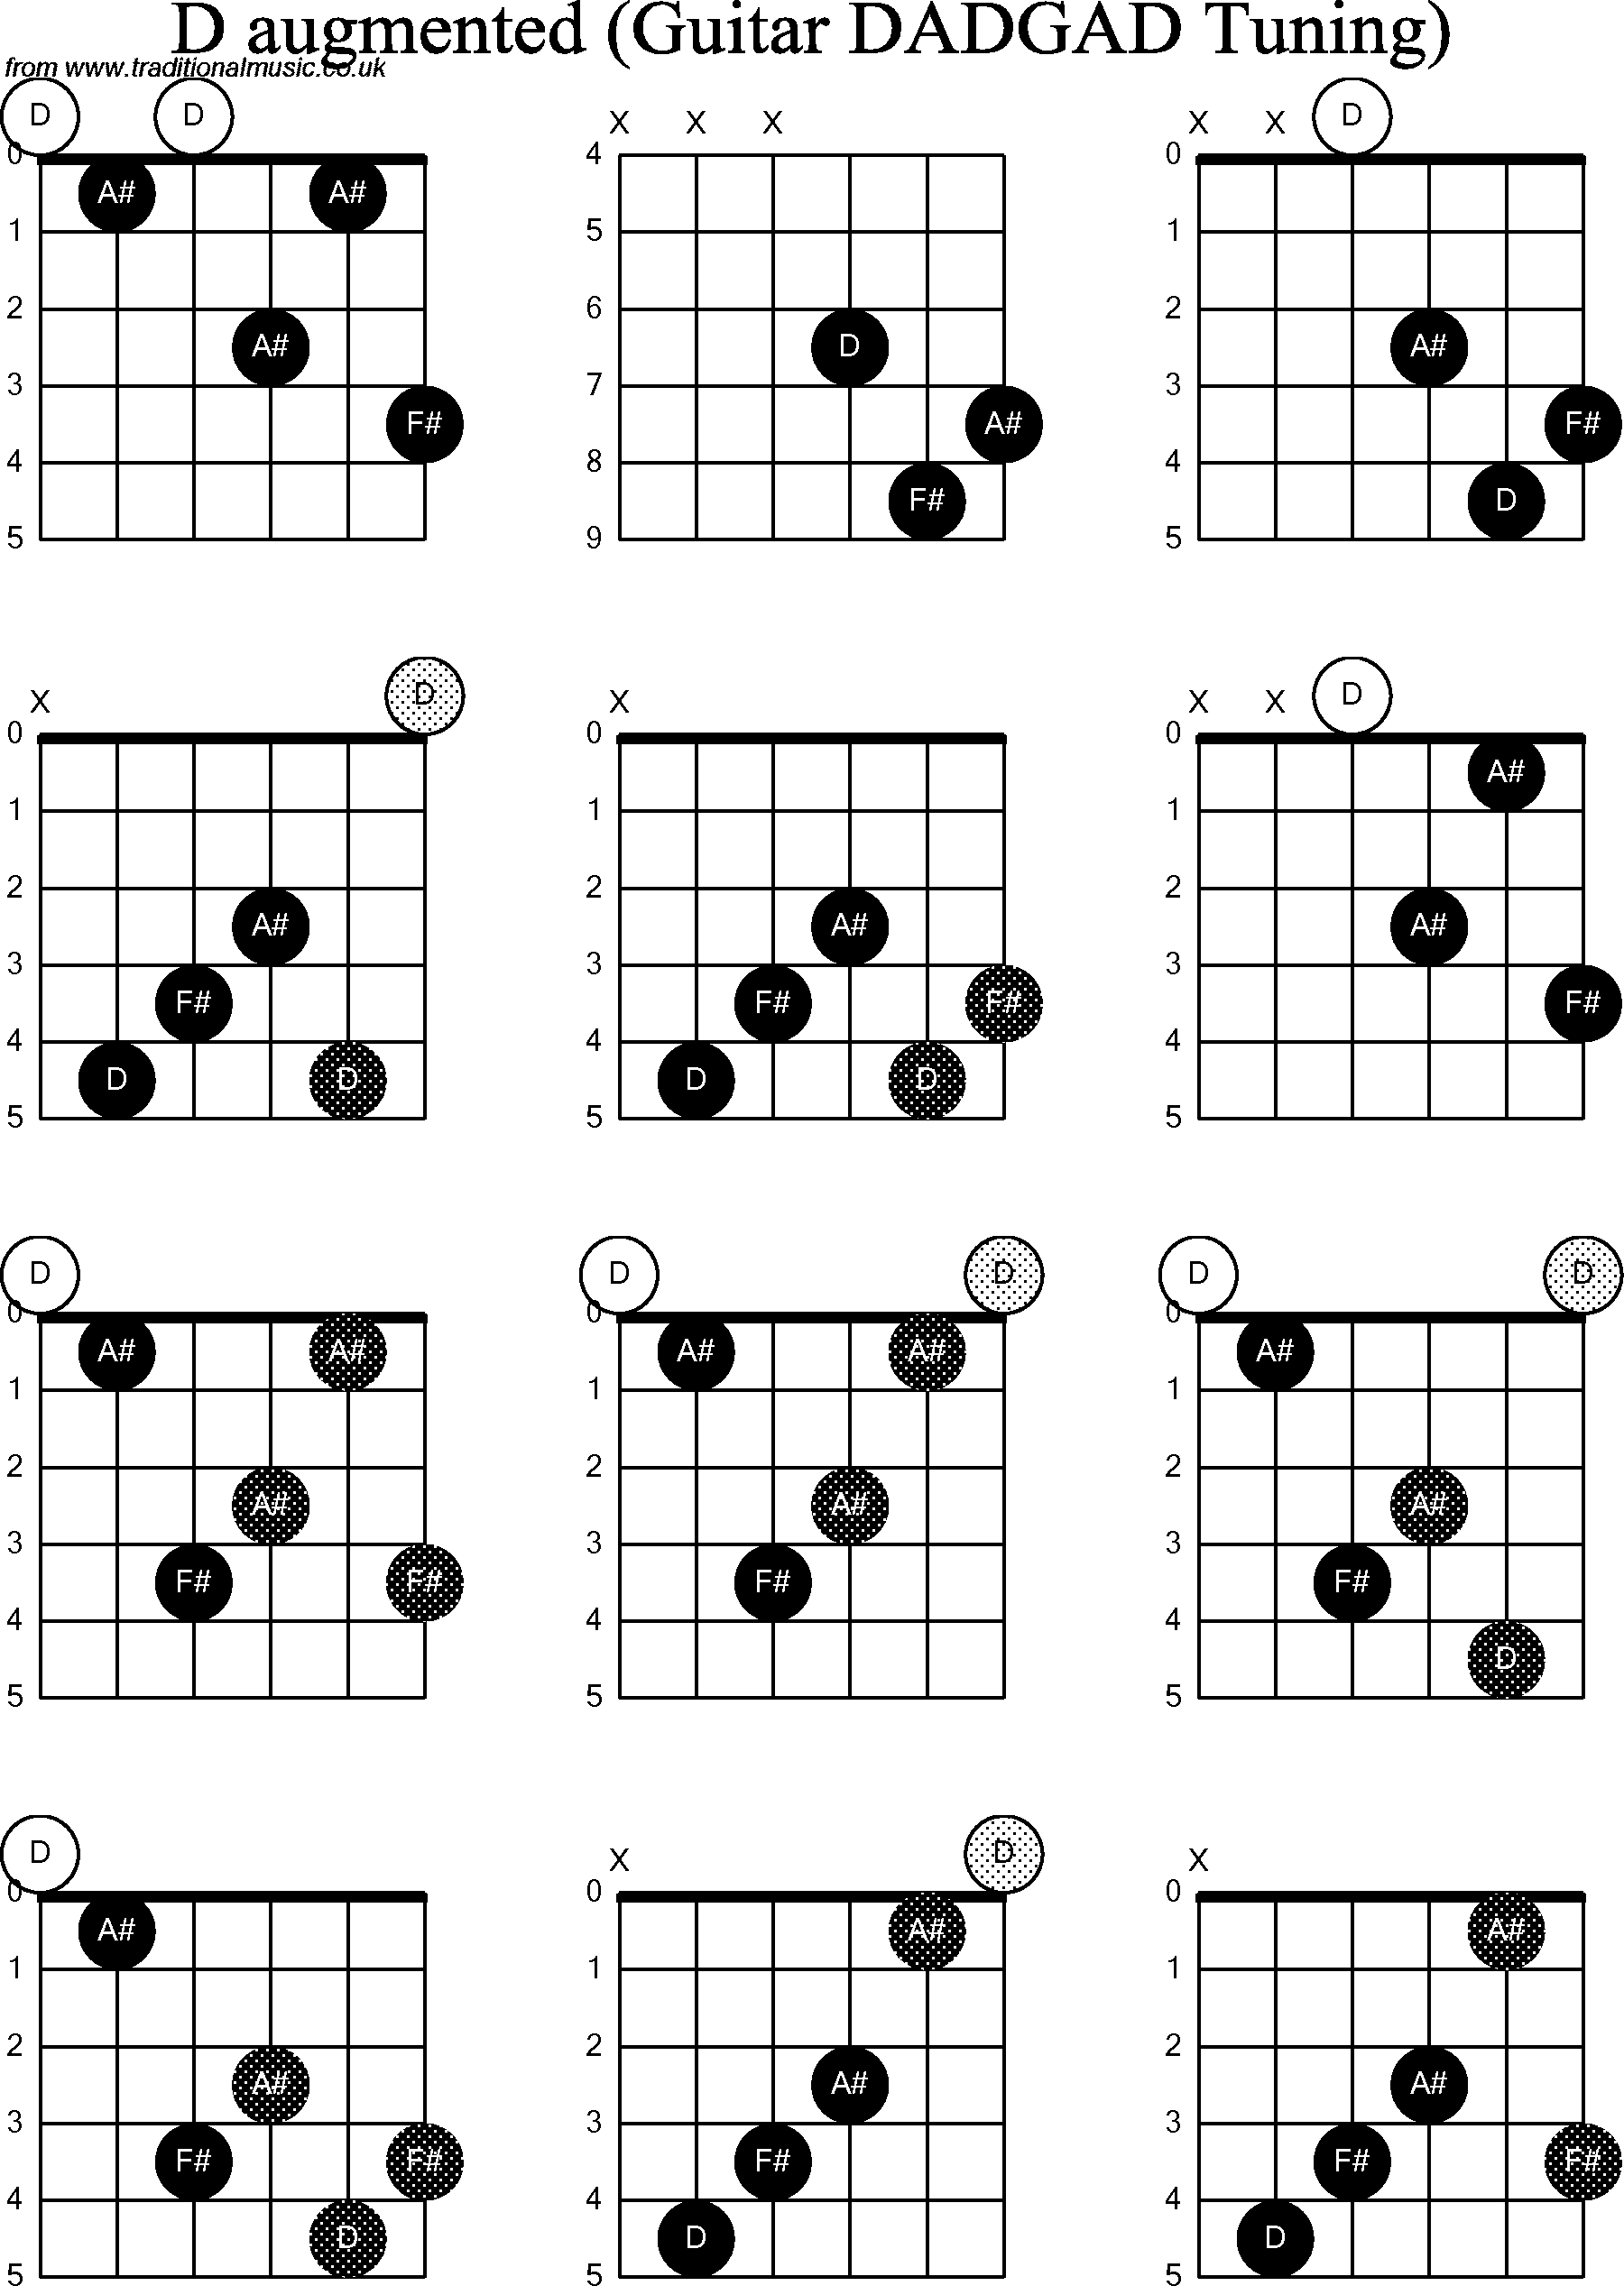 Chord Diagrams for D Modal Guitar(DADGAD), D Augmented